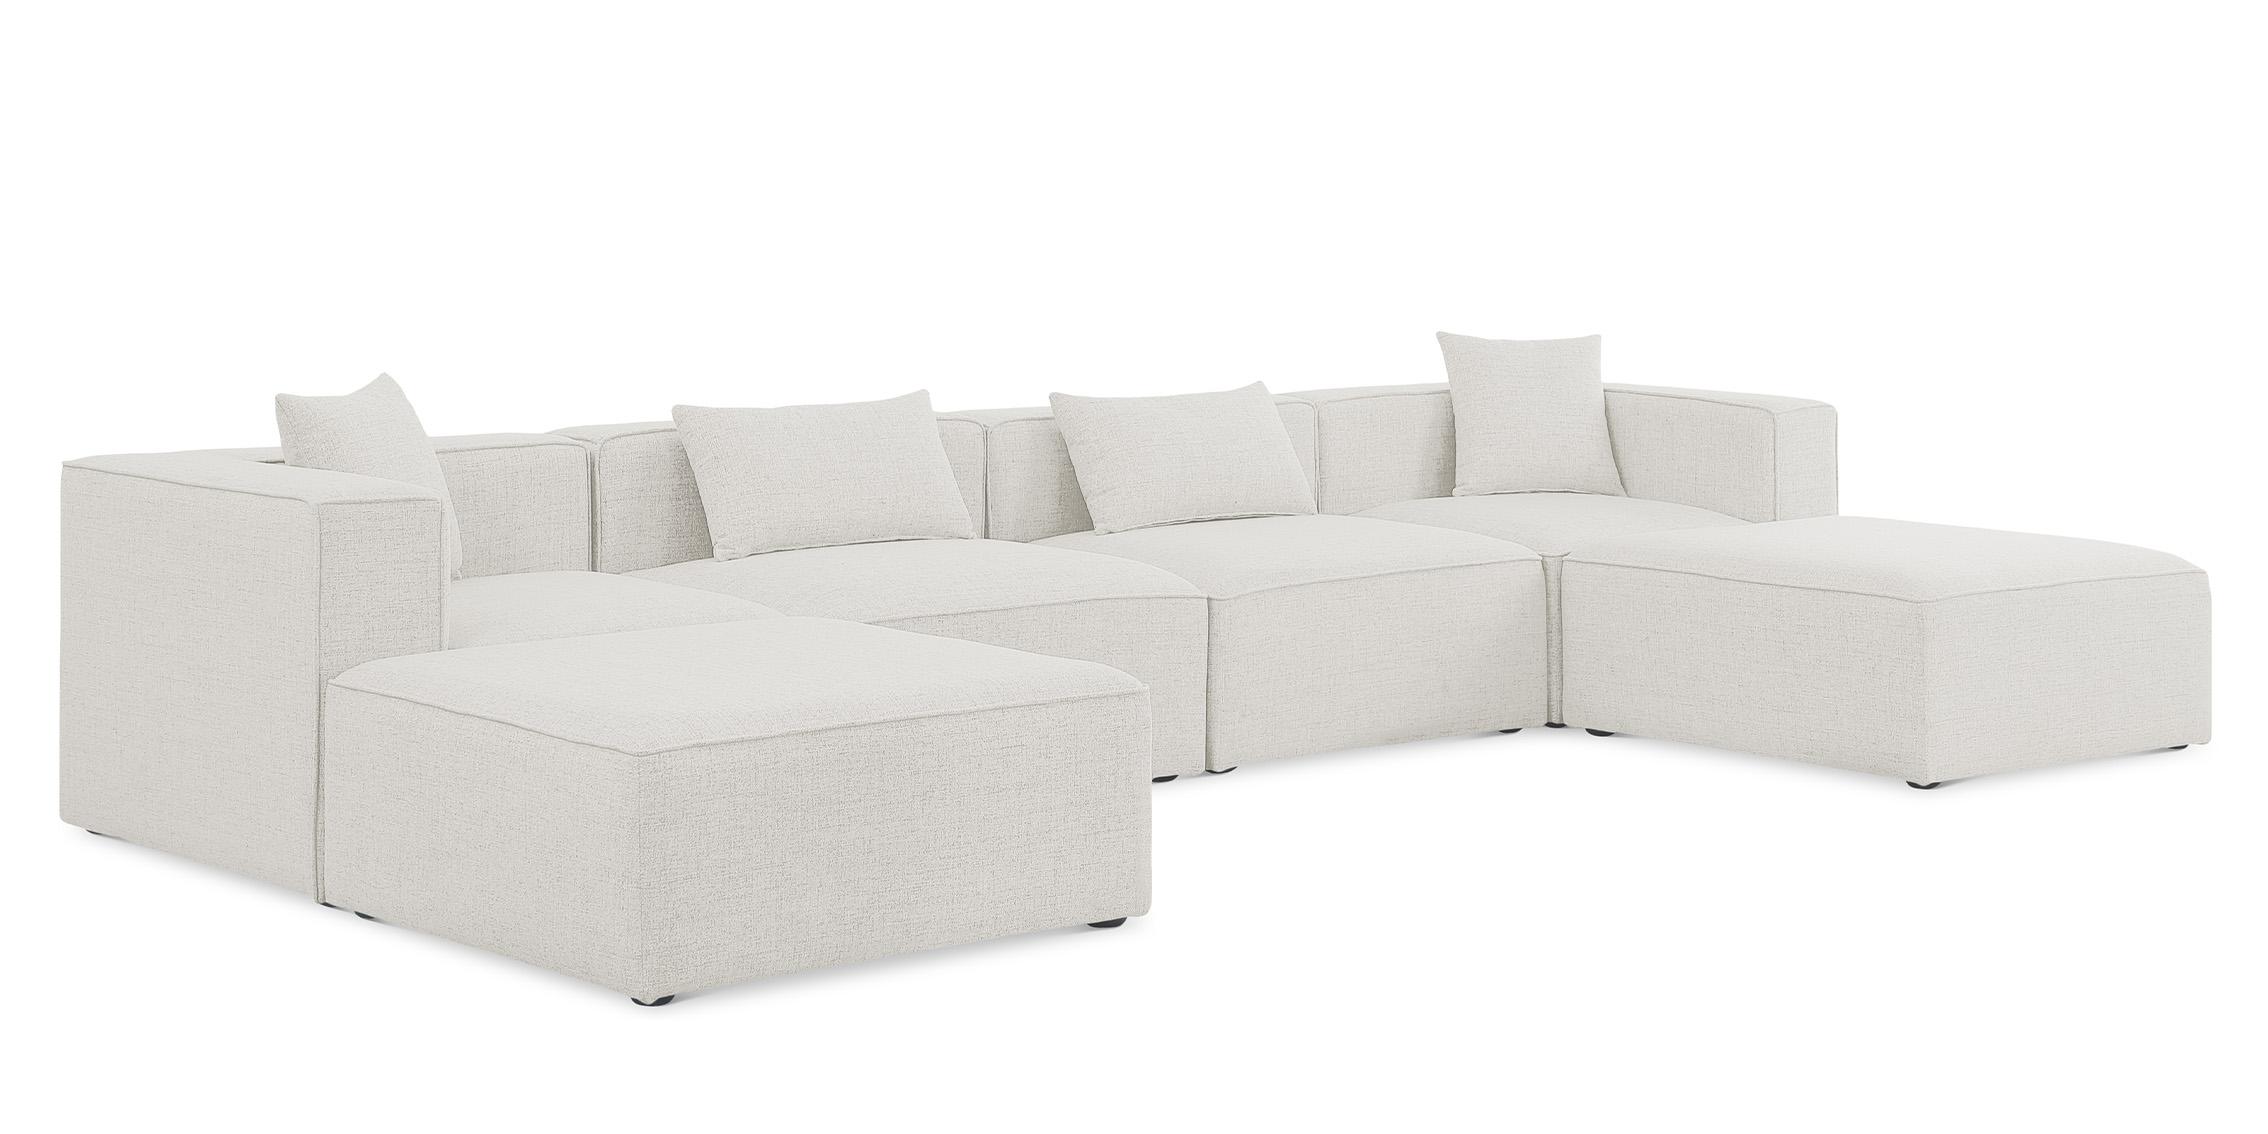 Contemporary, Modern Modular Sectional Sofa CUBE 630Cream-Sec6B 630Cream-Sec6B in Cream Linen